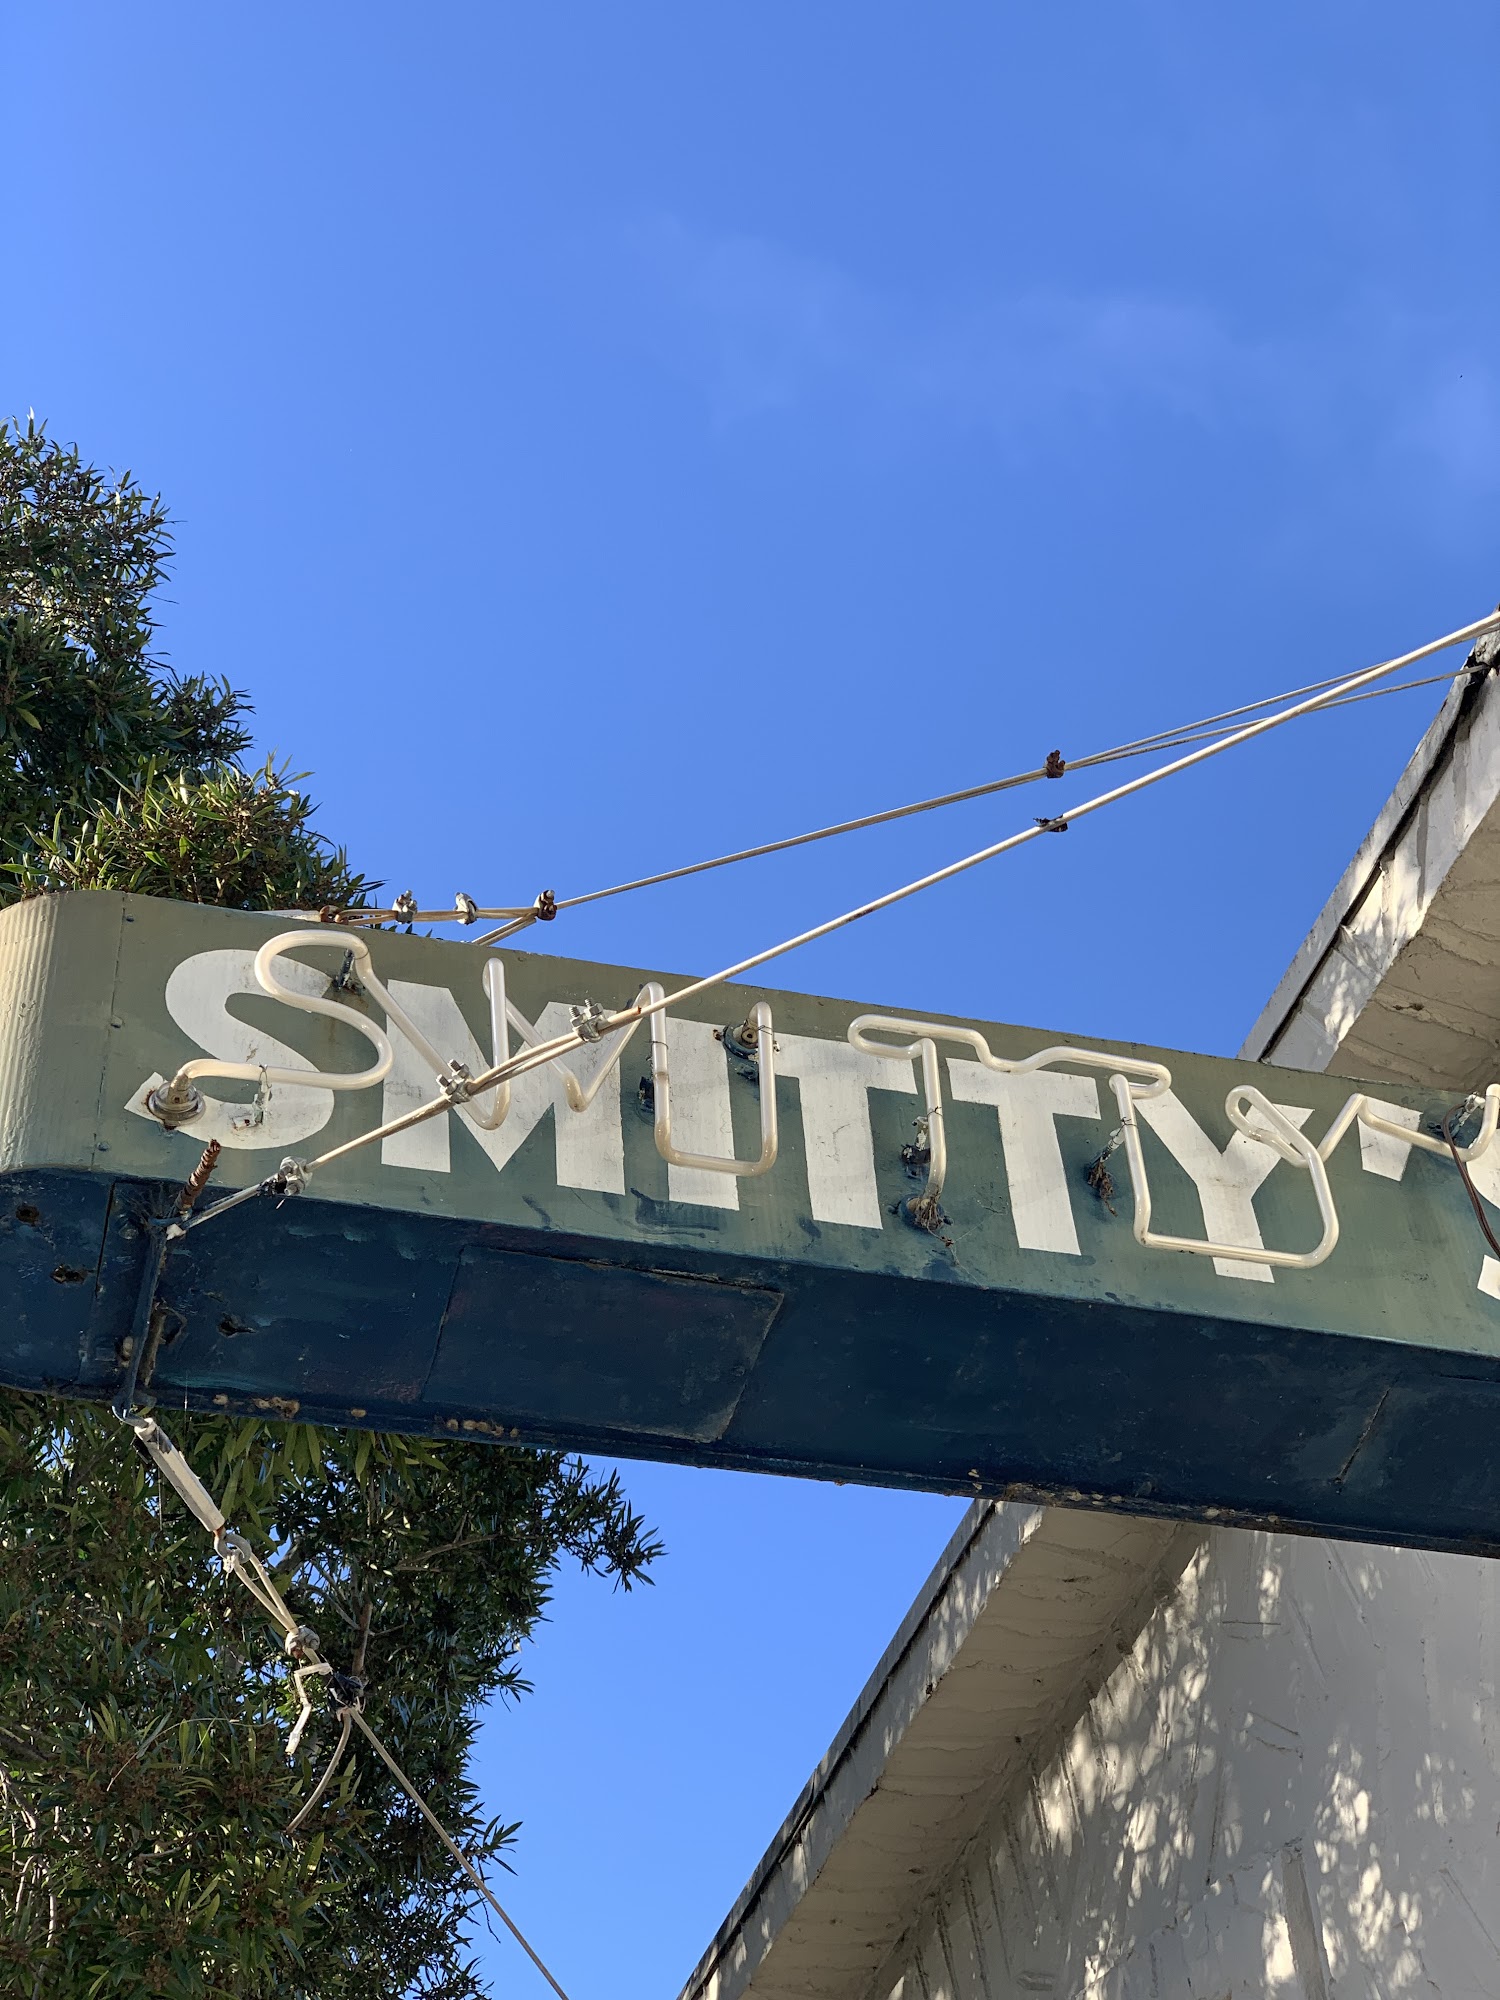 Smitty's Bar